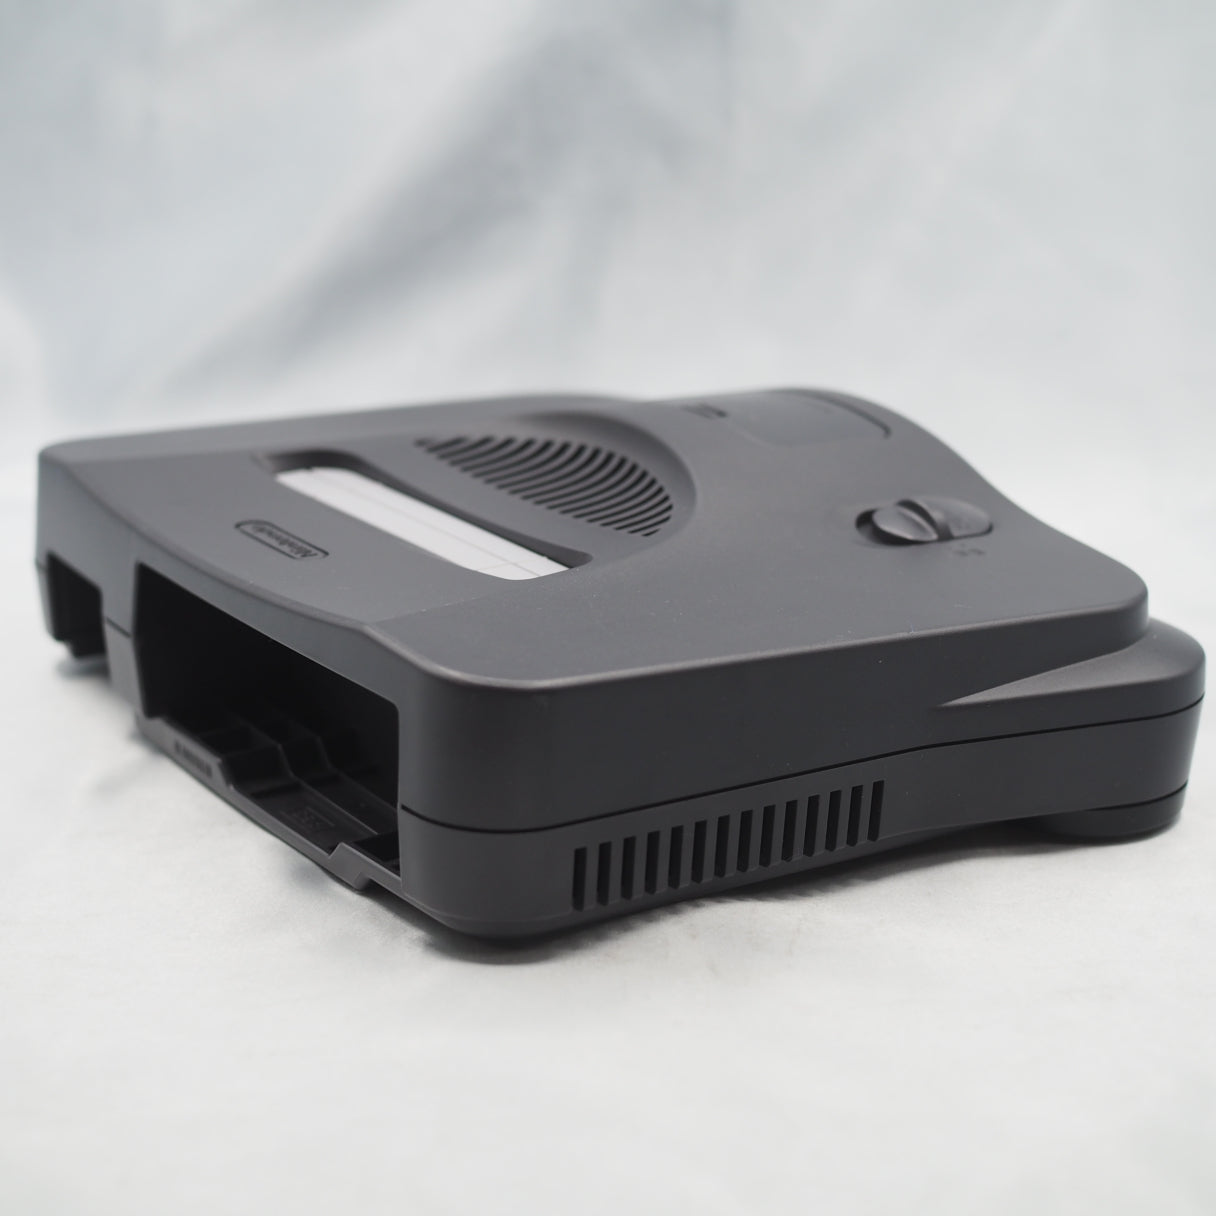 Nintendo 64 Console System Black NUS-001 [Region Free]